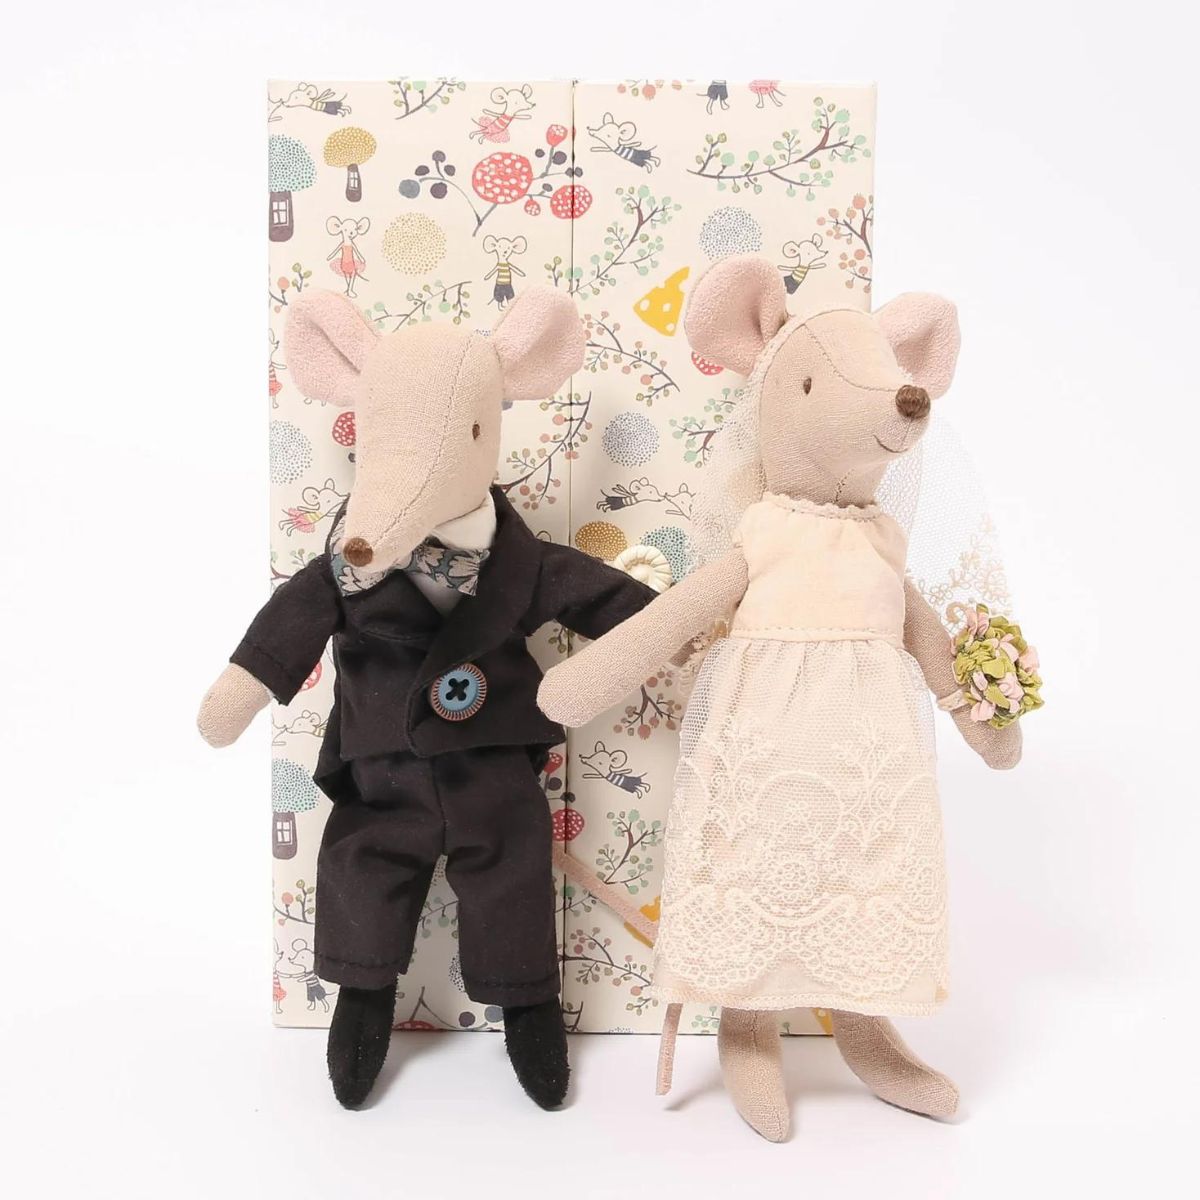 Soricei Maileg Wedding mice couple in box - Maileg